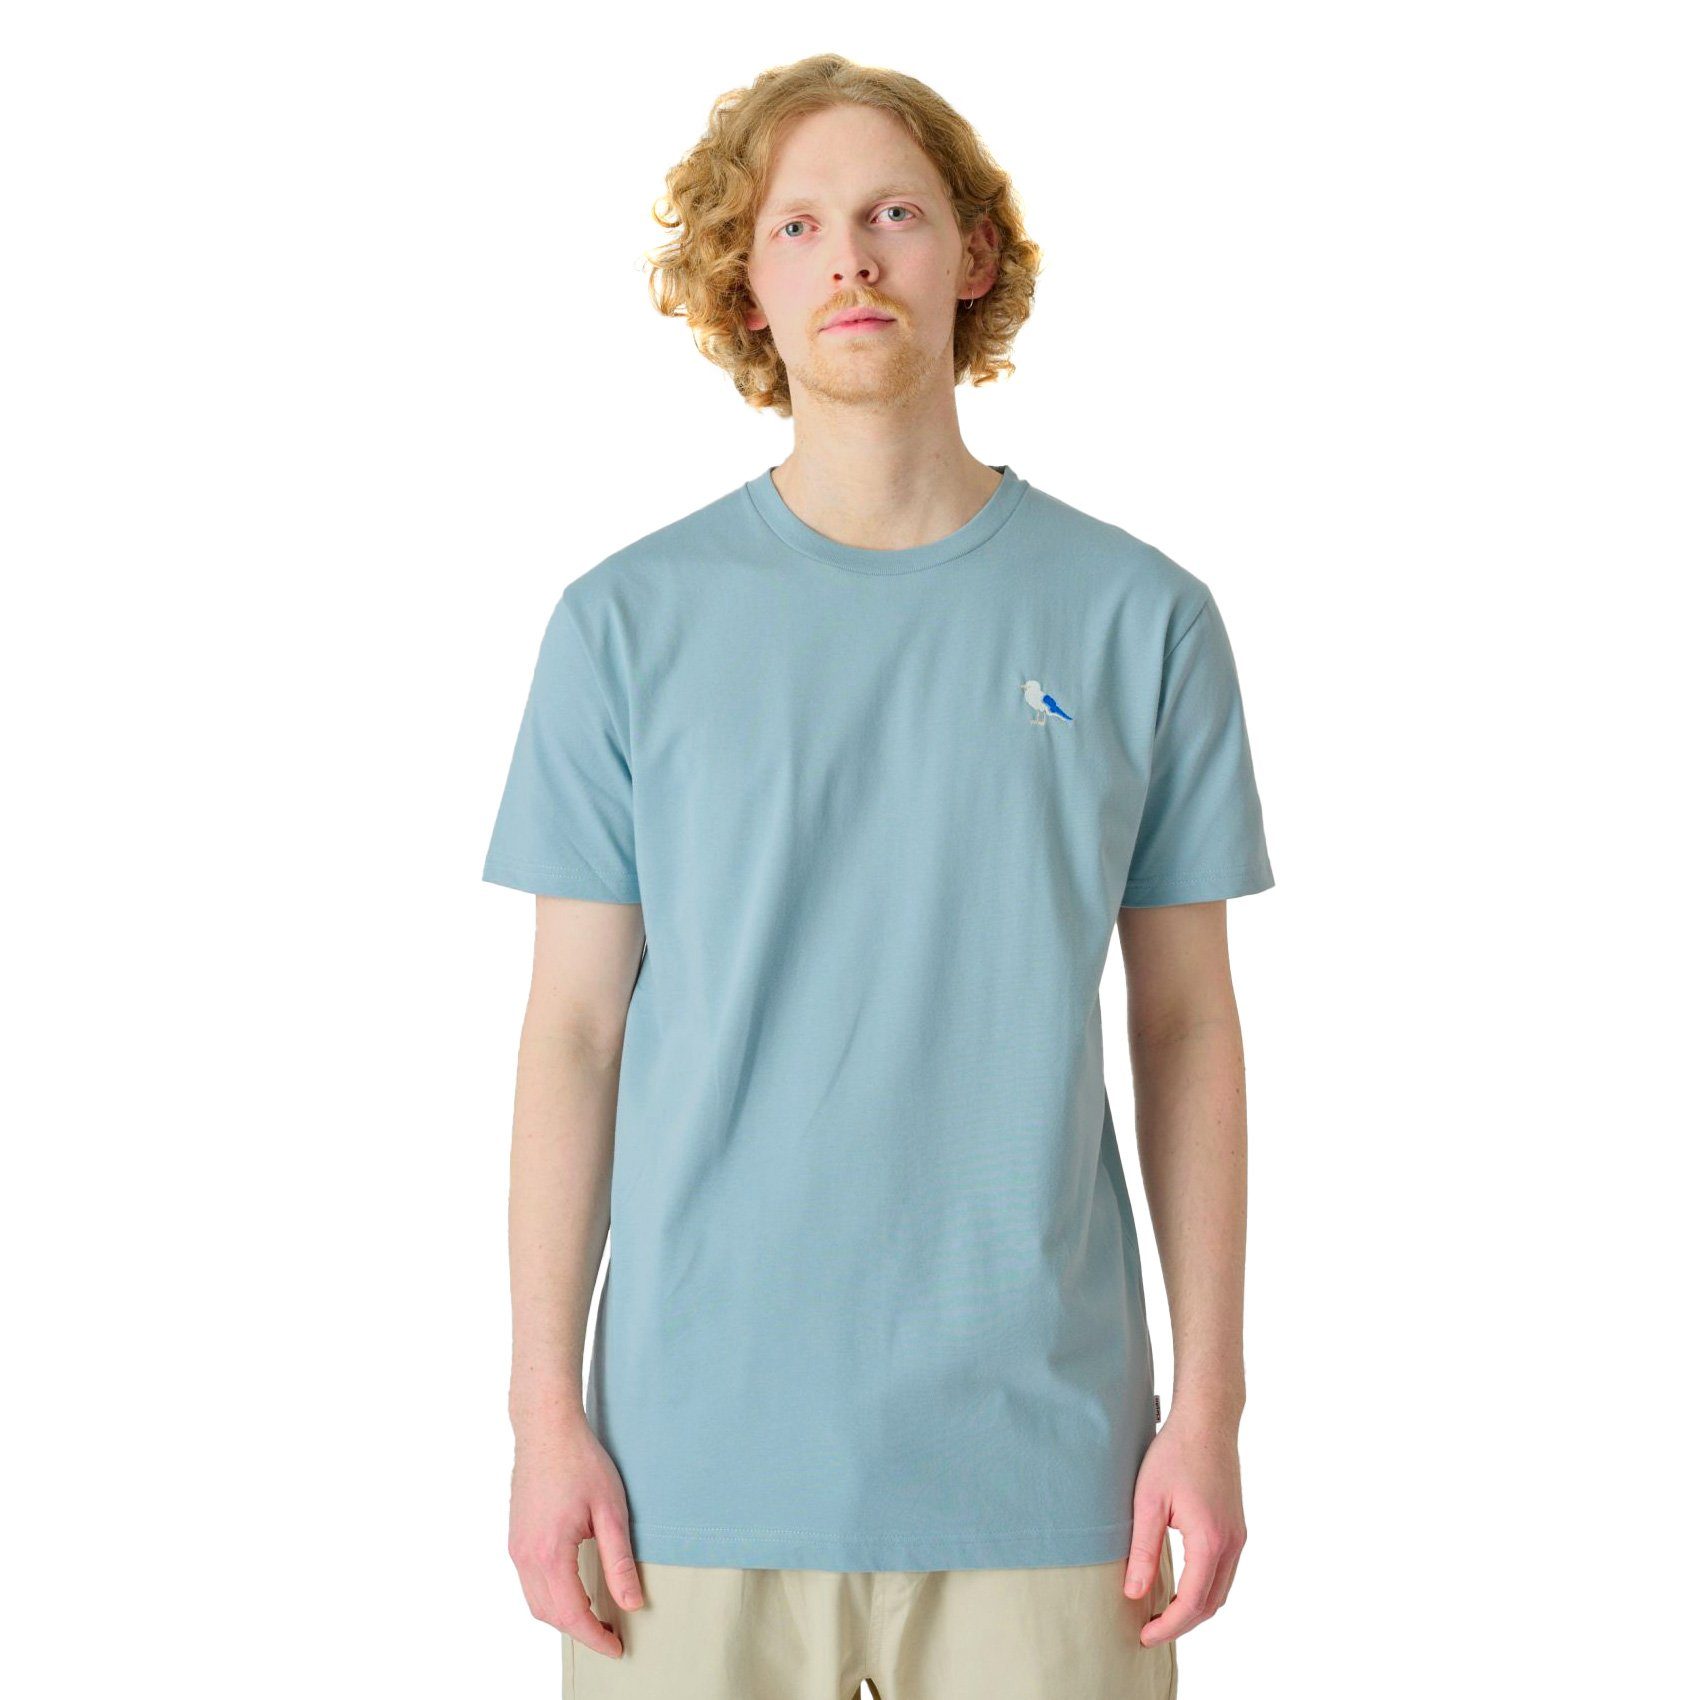 Cleptomanicx T-Shirt blue - arona Gull Embro